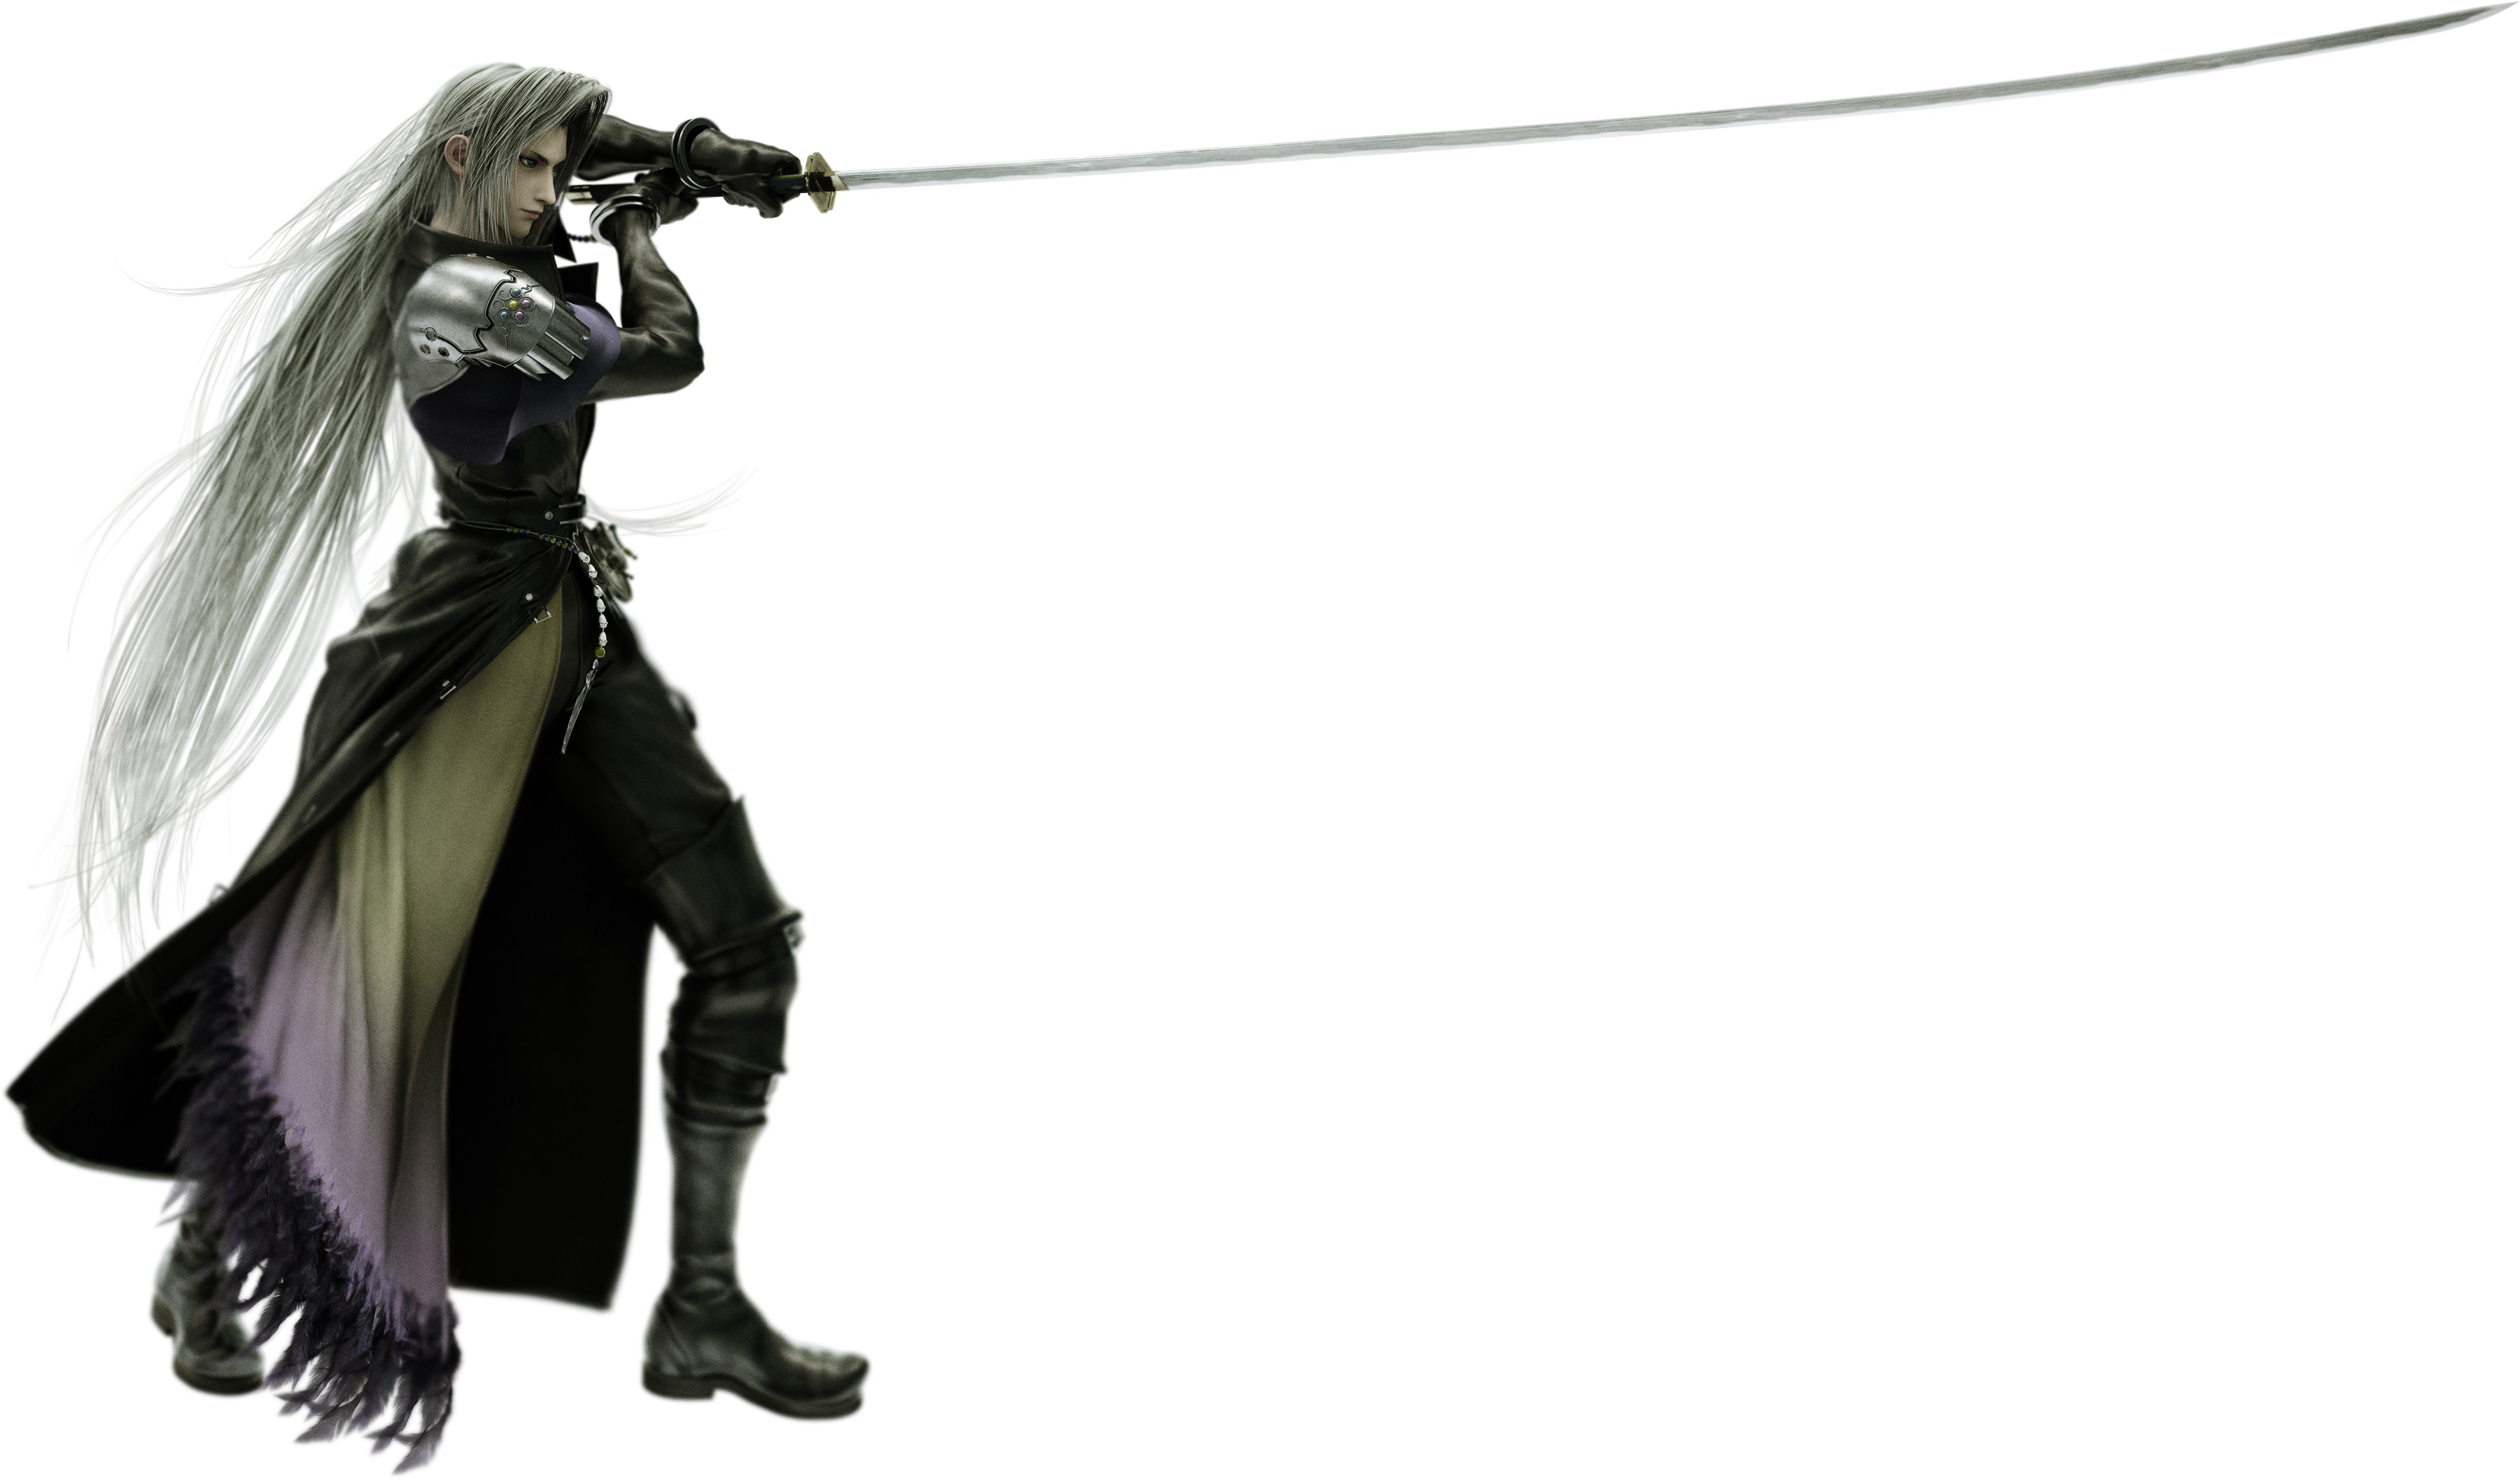 Sephiroth sword